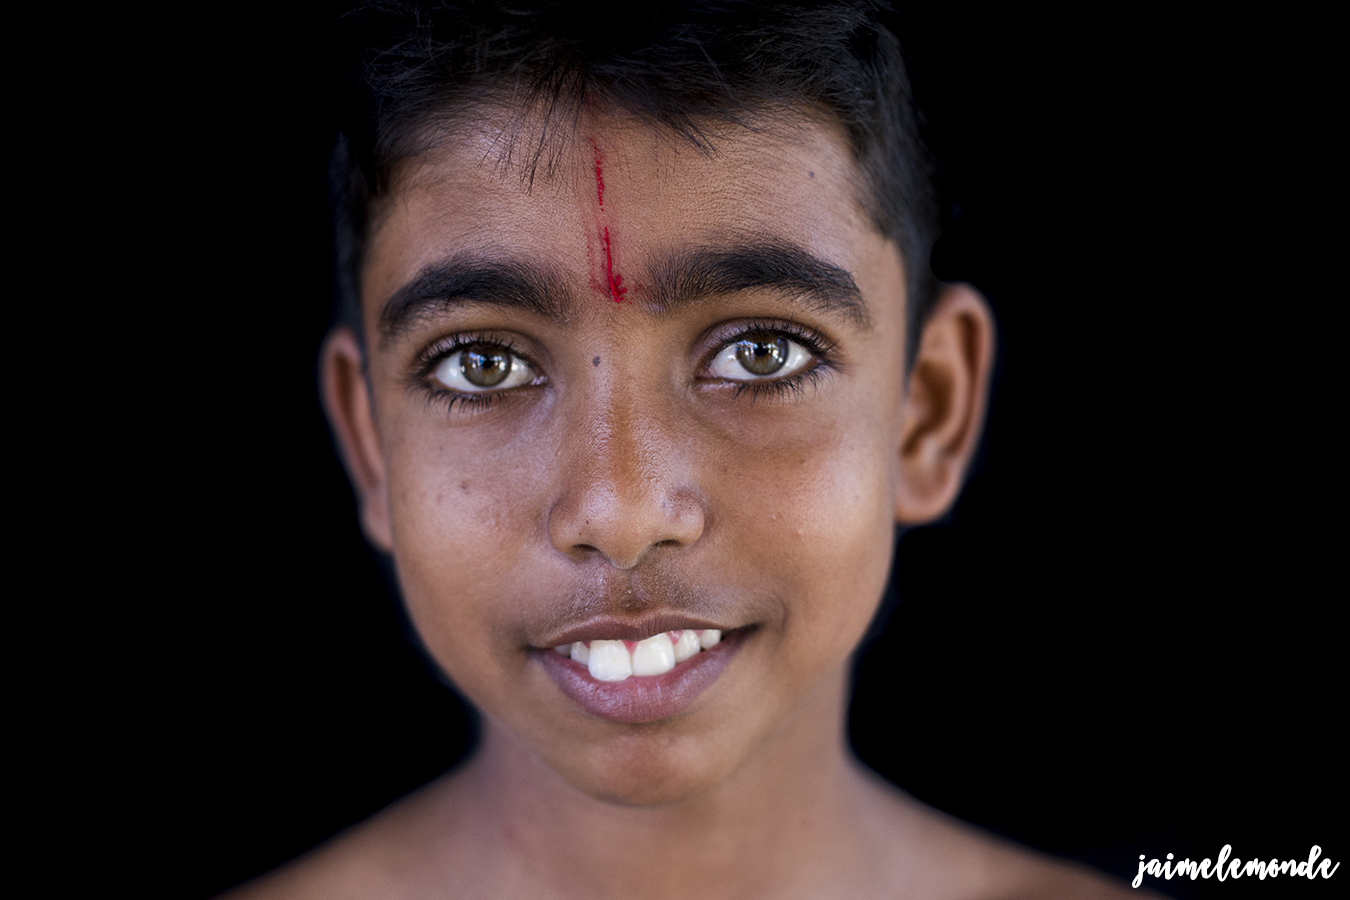 Portraits de voyage au Sri Lanka ©jaimelemonde (8)